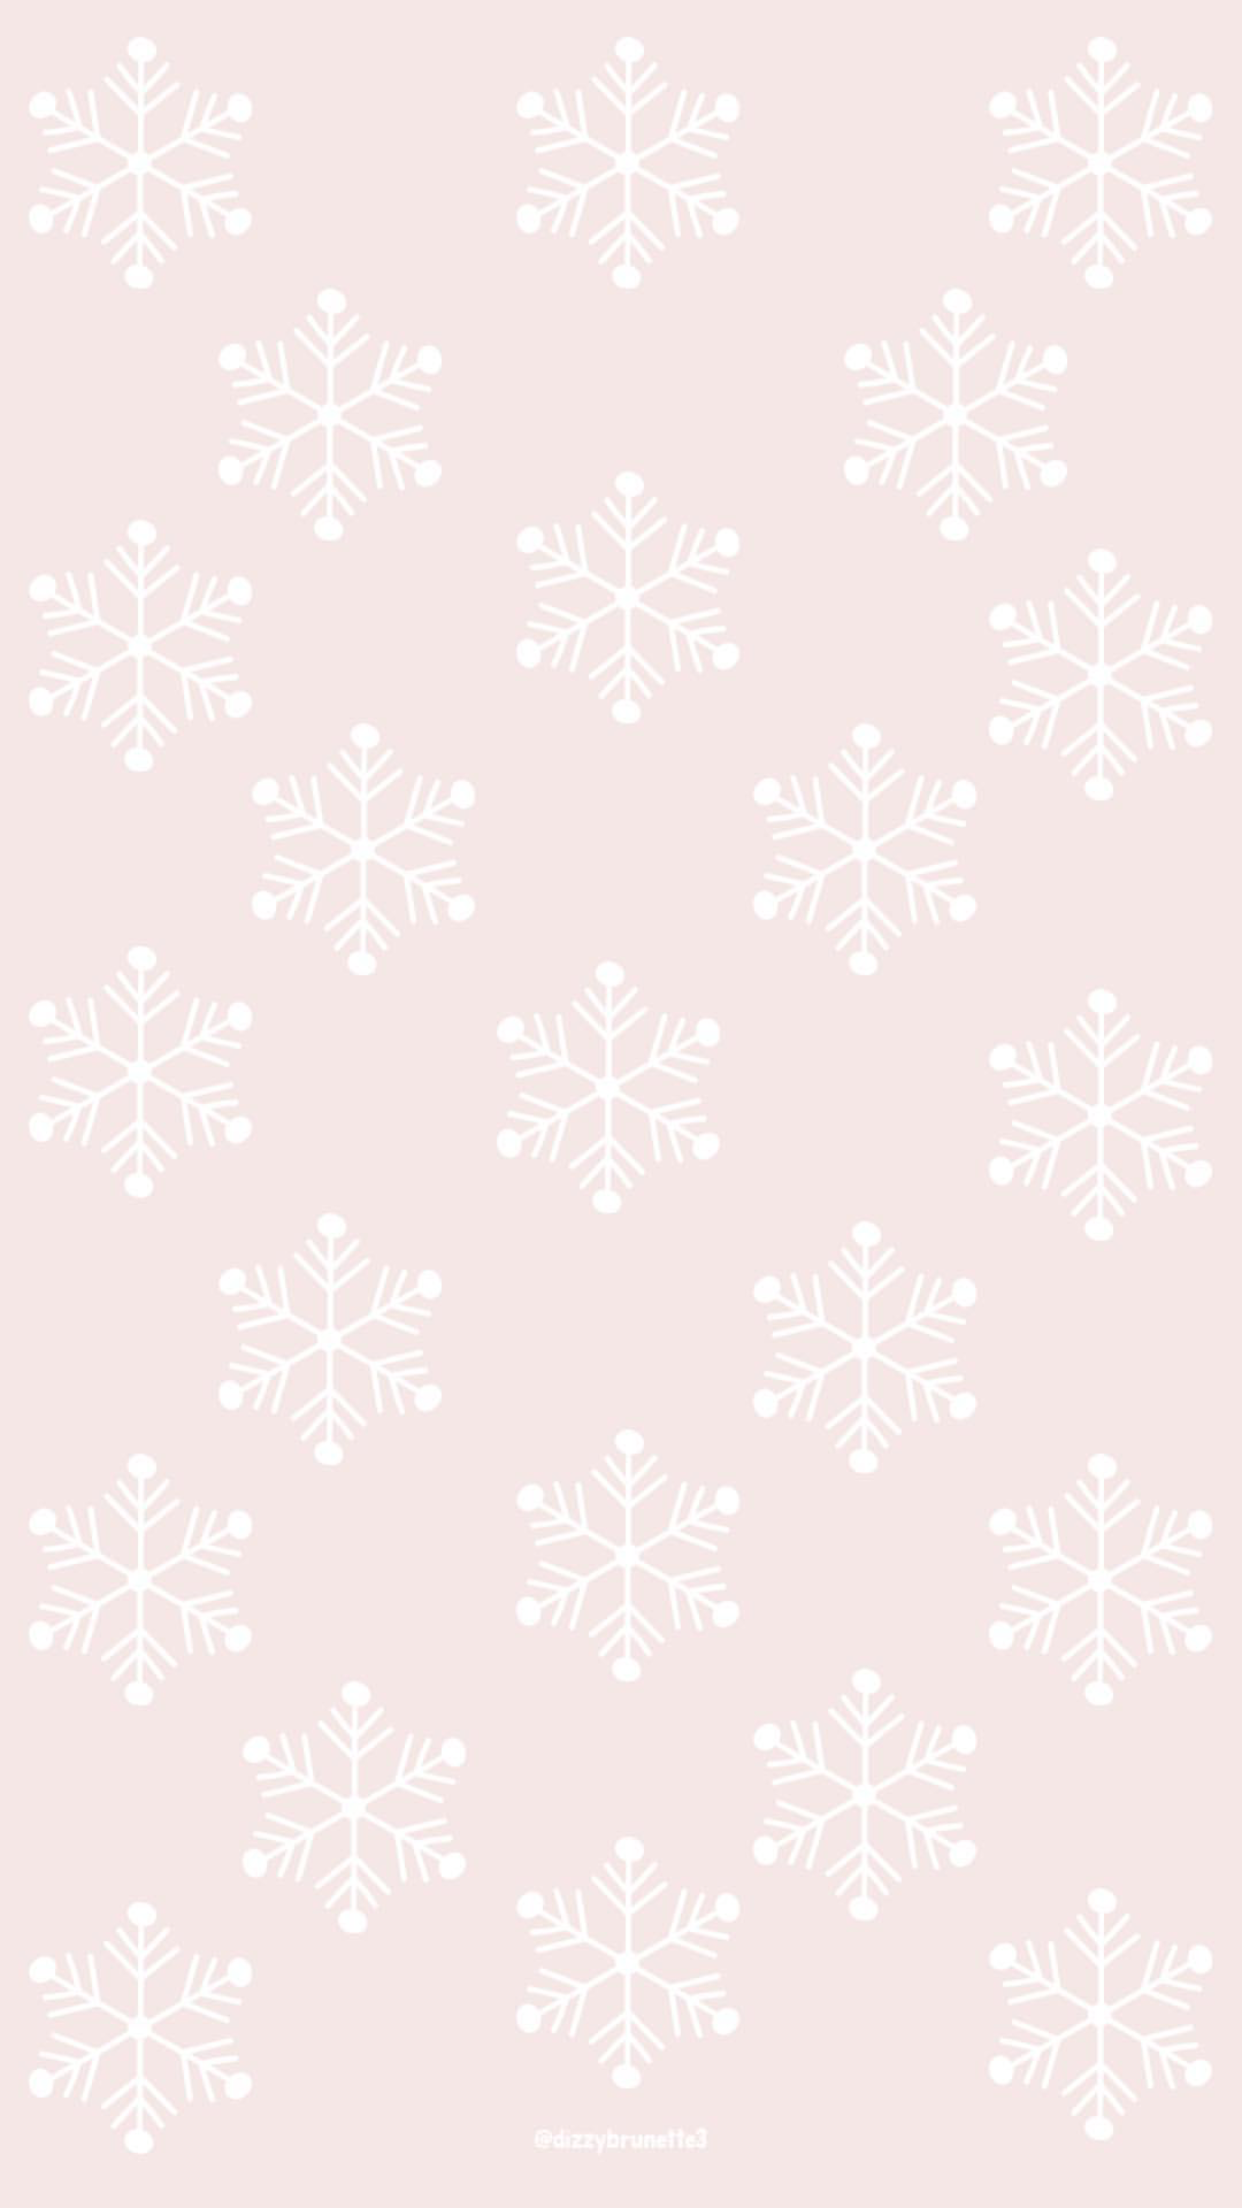 pattern #snowflakes #winter. Christmas phone wallpaper, Wallpaper iphone christmas, Xmas wallpaper